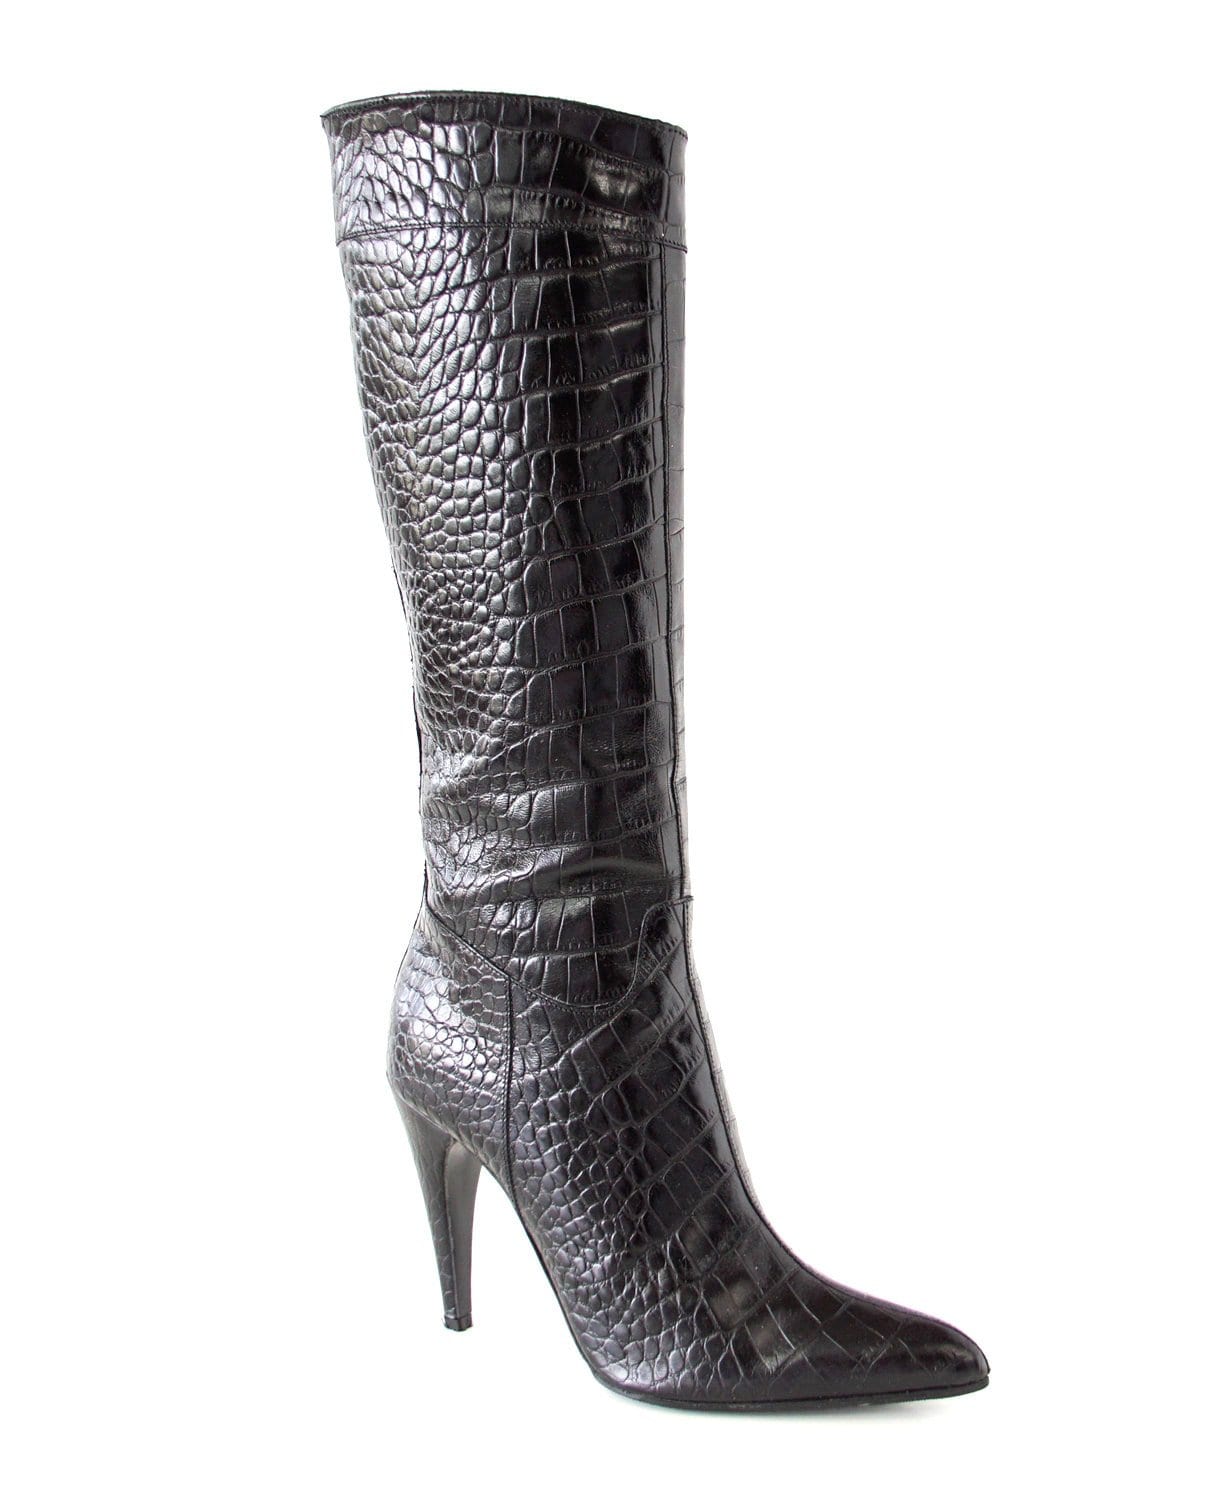 Prada Boot Sleek Rich Black Crocodile Knee High 37 / 7 - mightychic